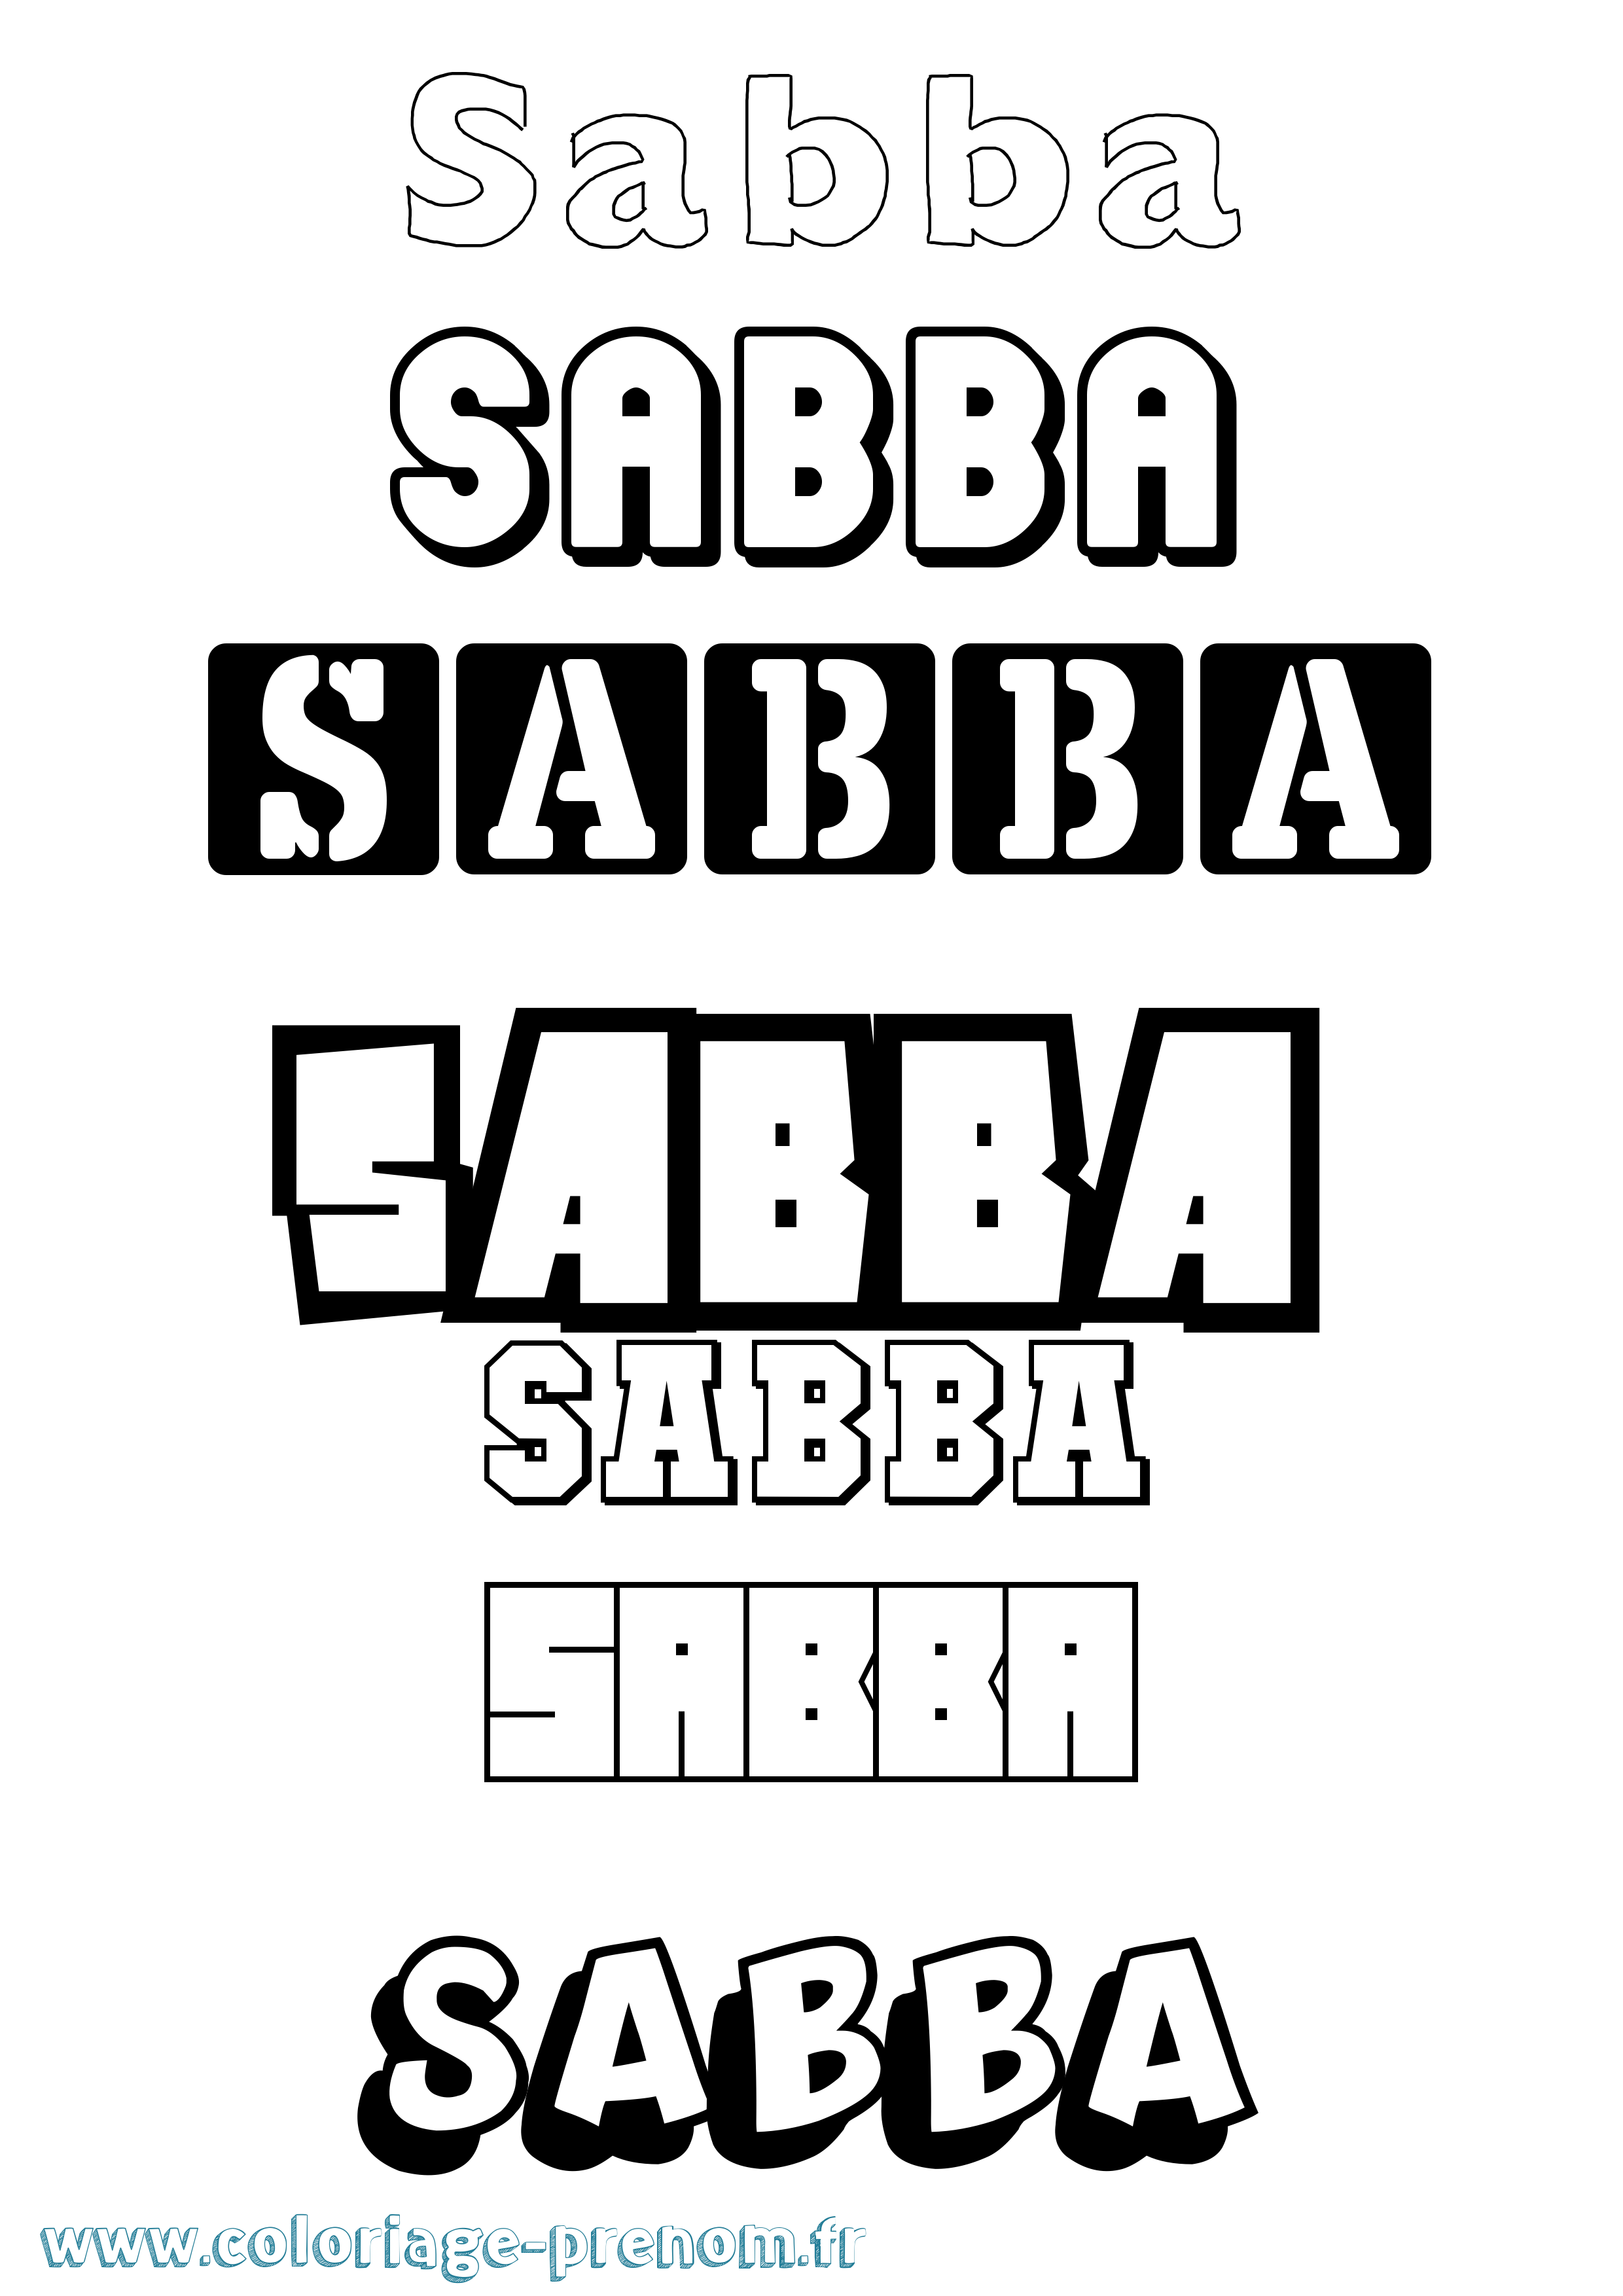 Coloriage prénom Sabba Simple